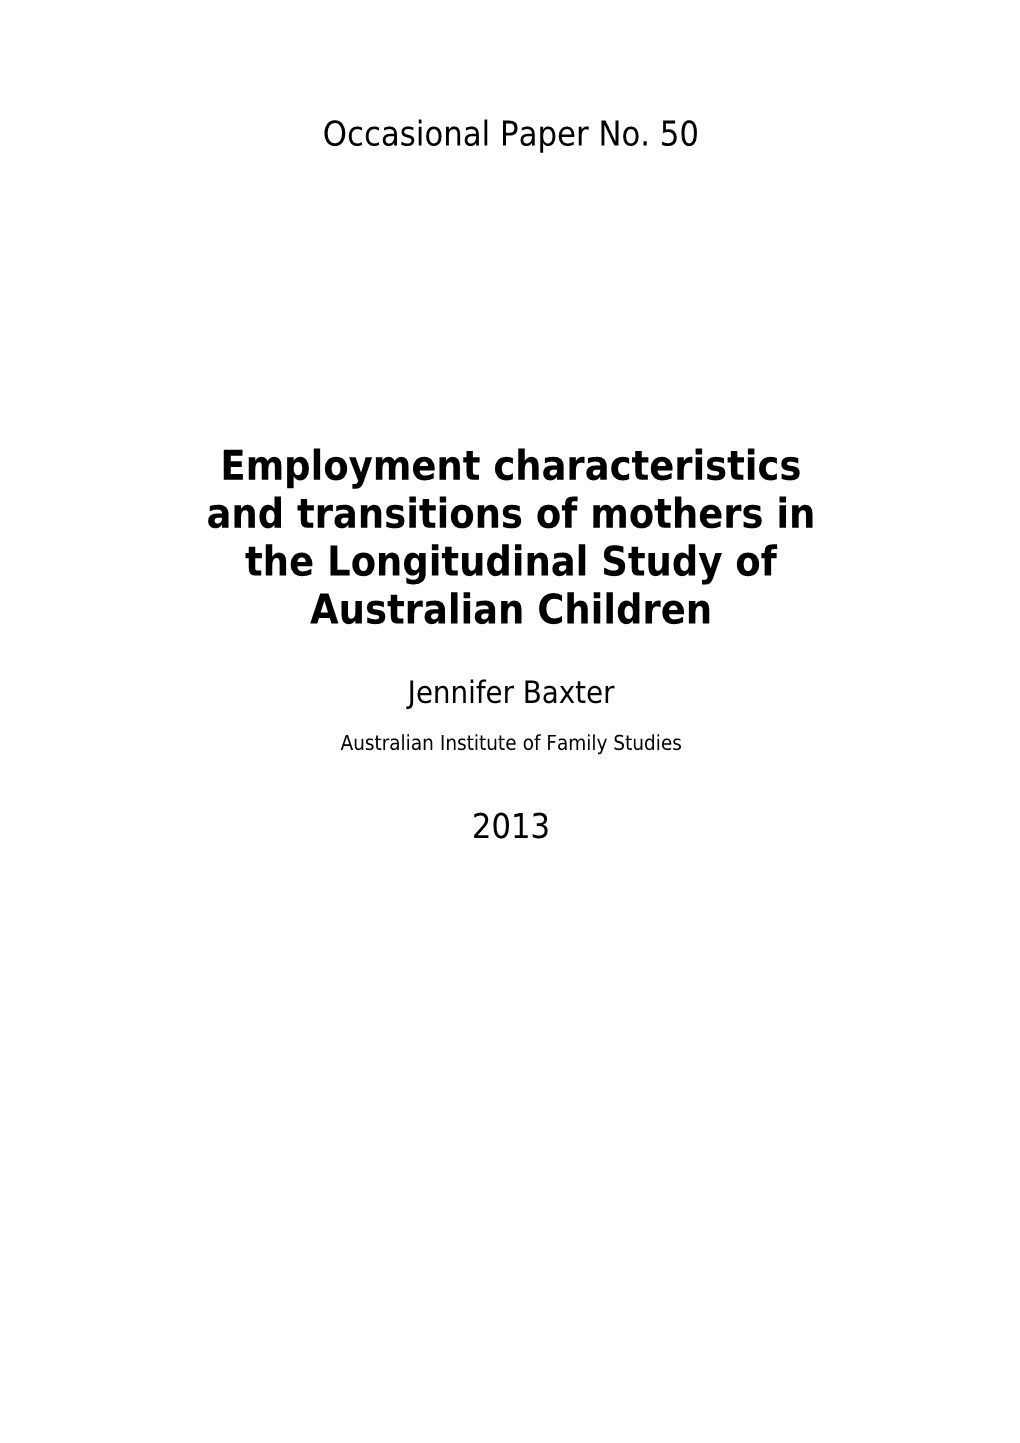 Lsac Research Report: Maternal Employment